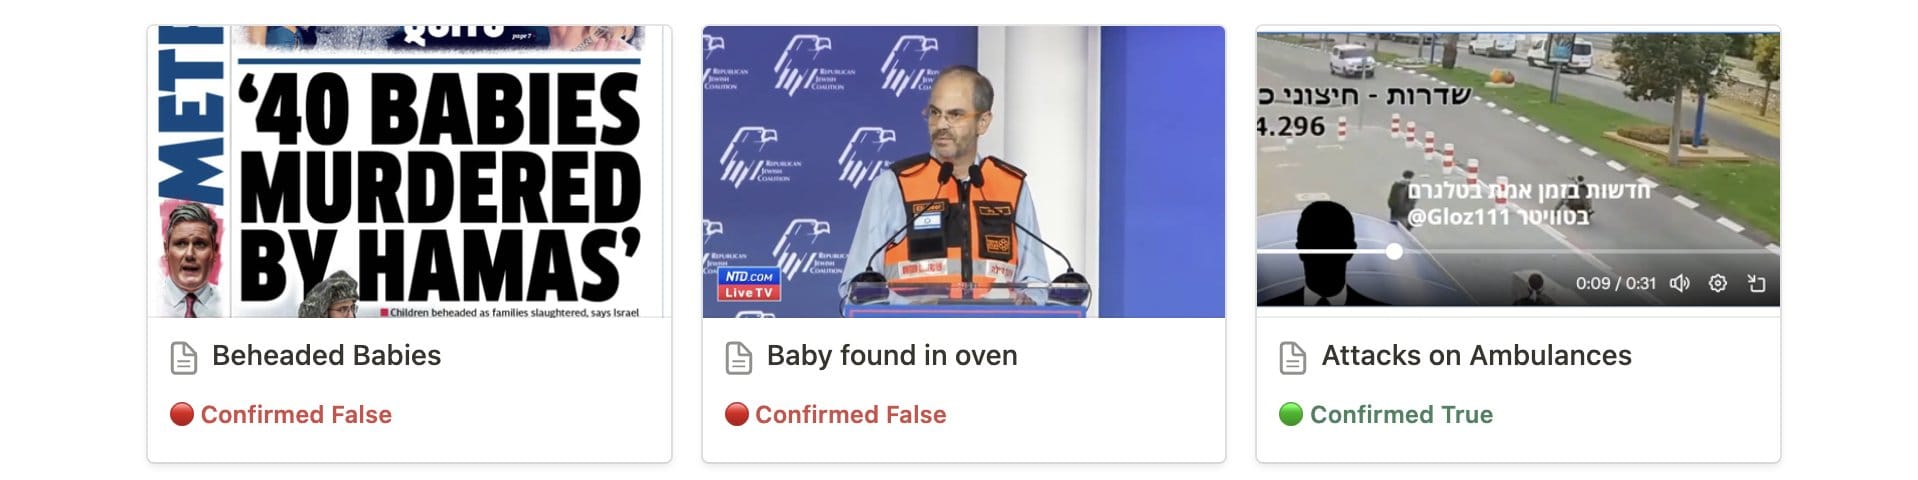 "Beheaded babies: confirmed false", "Baby found in oven: confirmed false", "Attacks on ambulances: confirmed true"